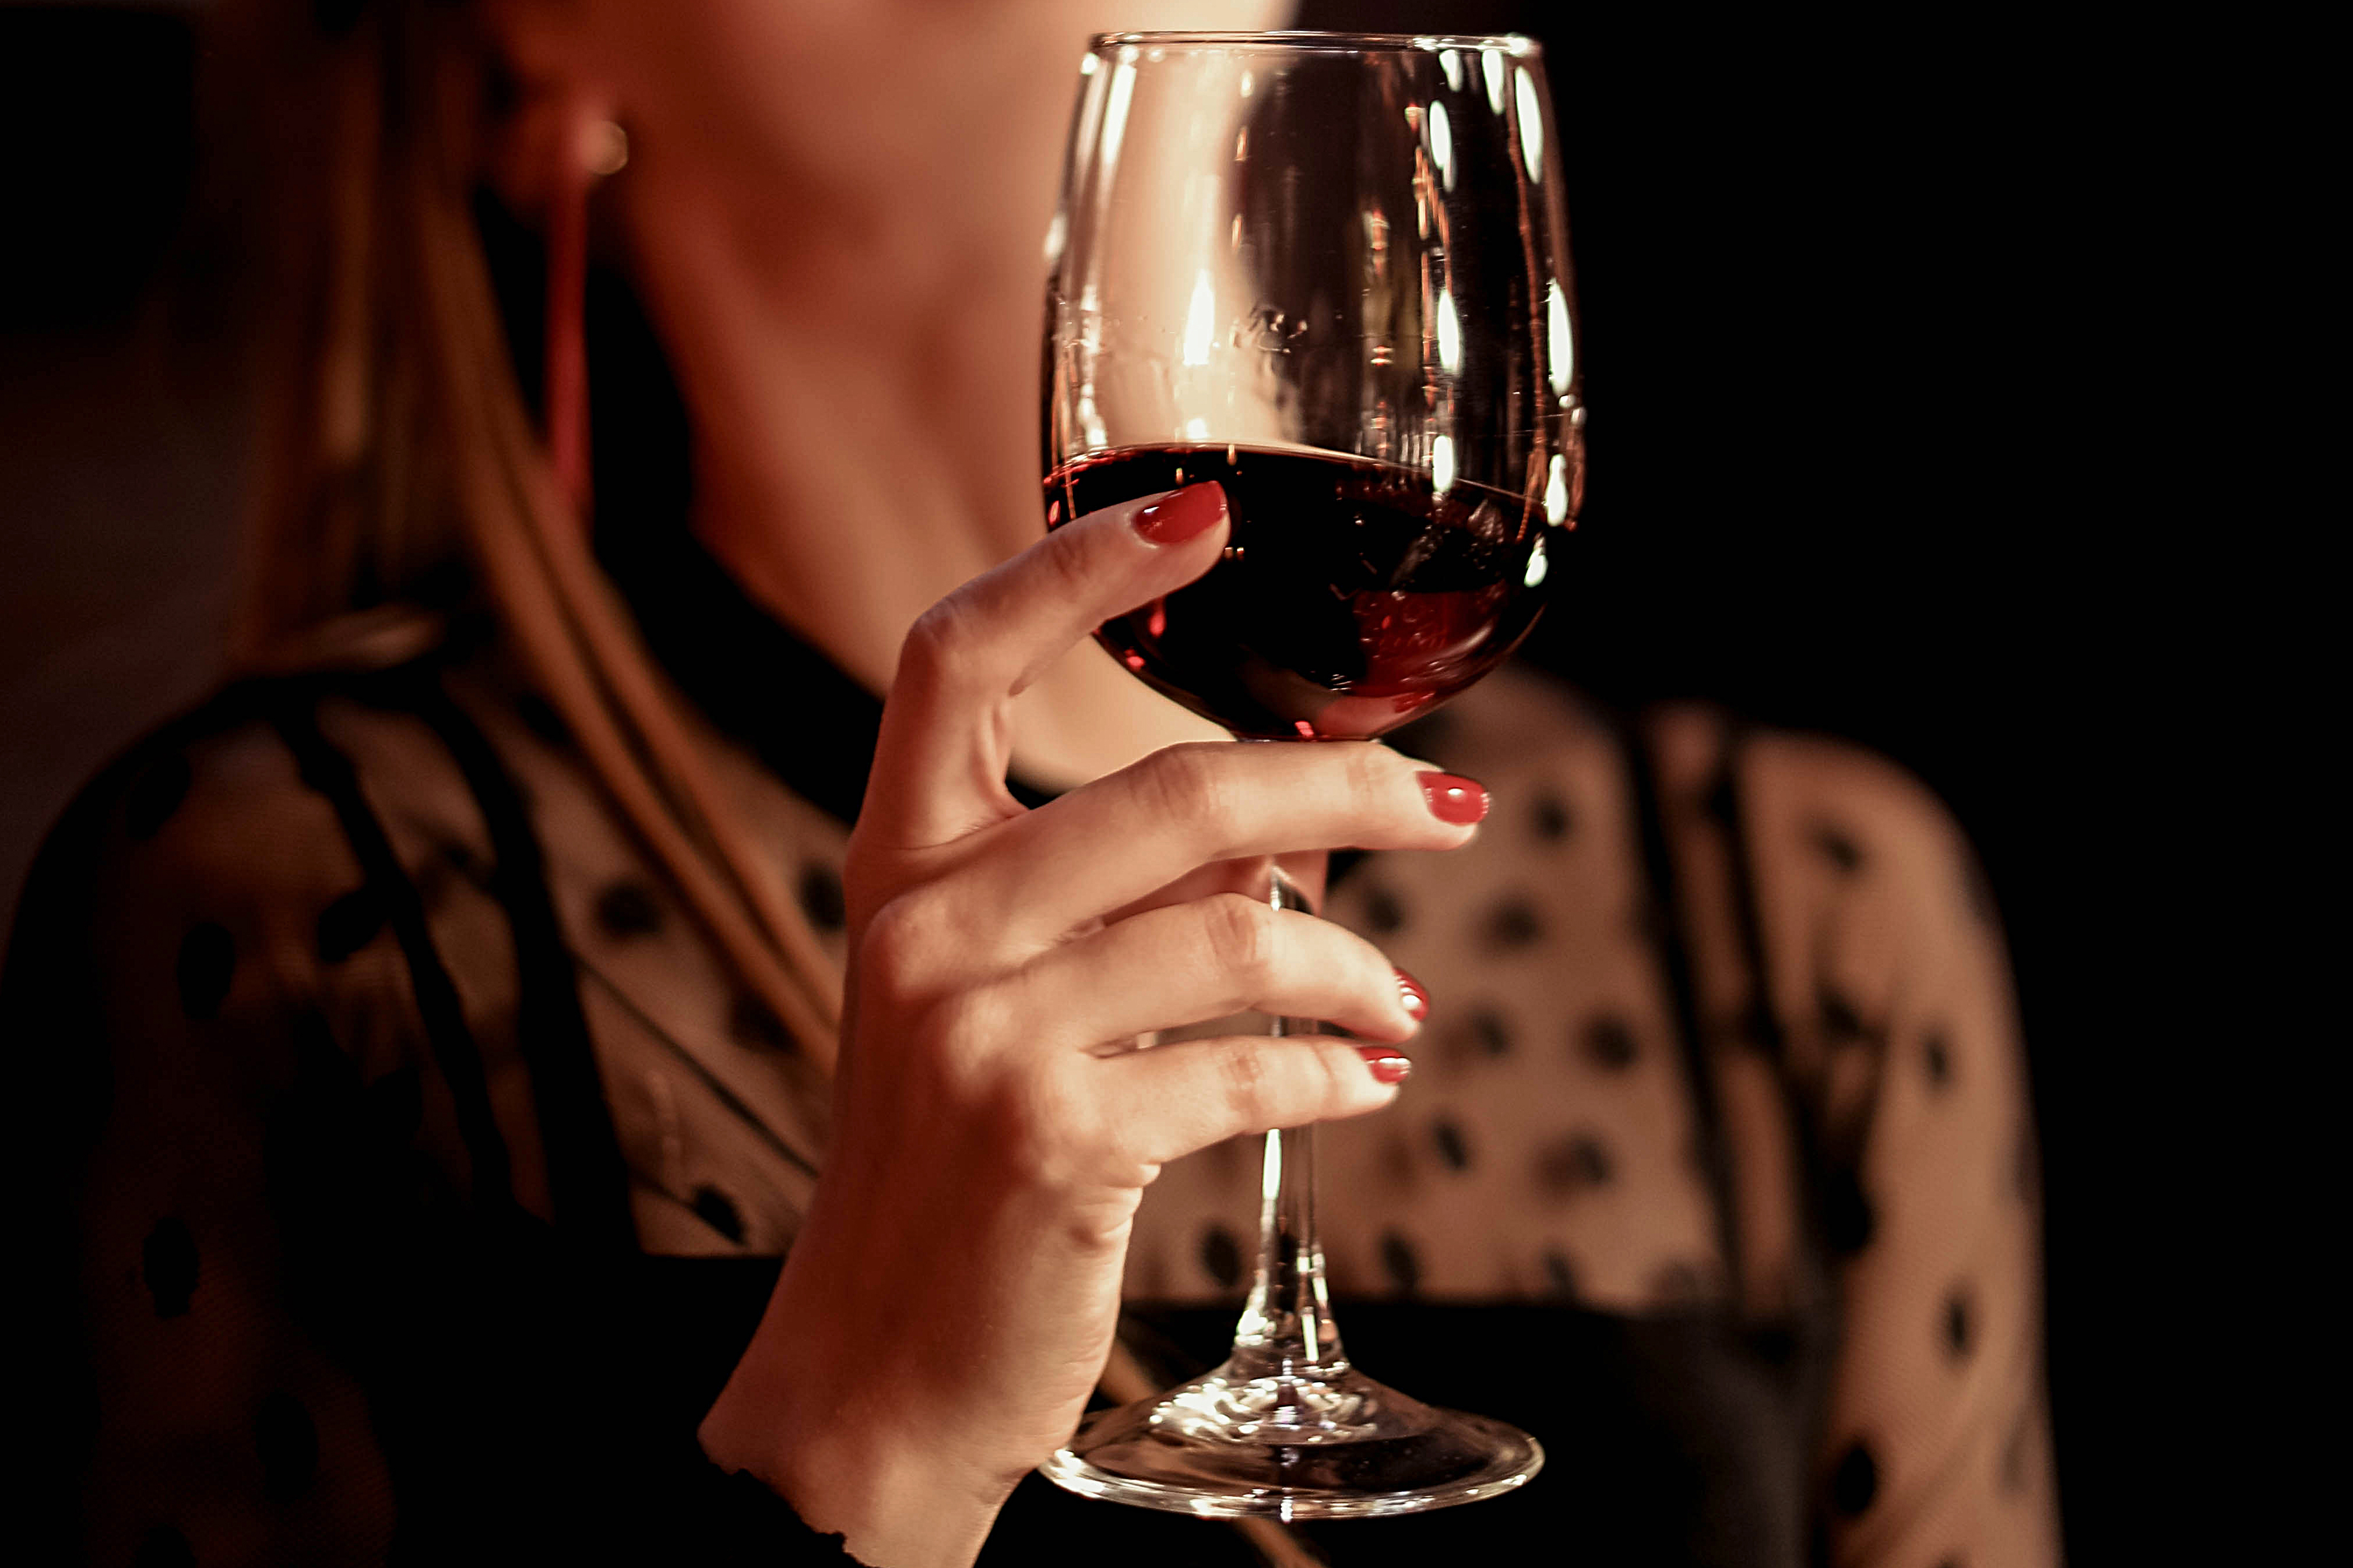 Woman raising a glass of wine | Source: Shutterstock